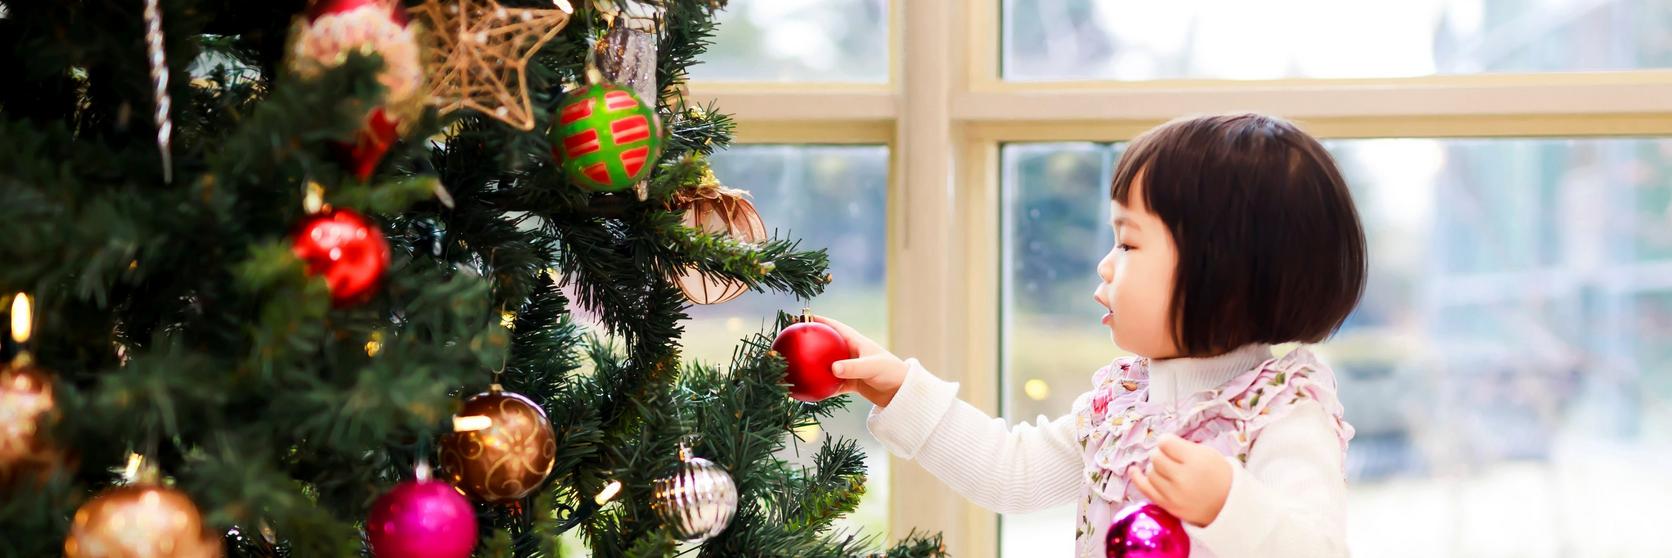 festive-family-decorating